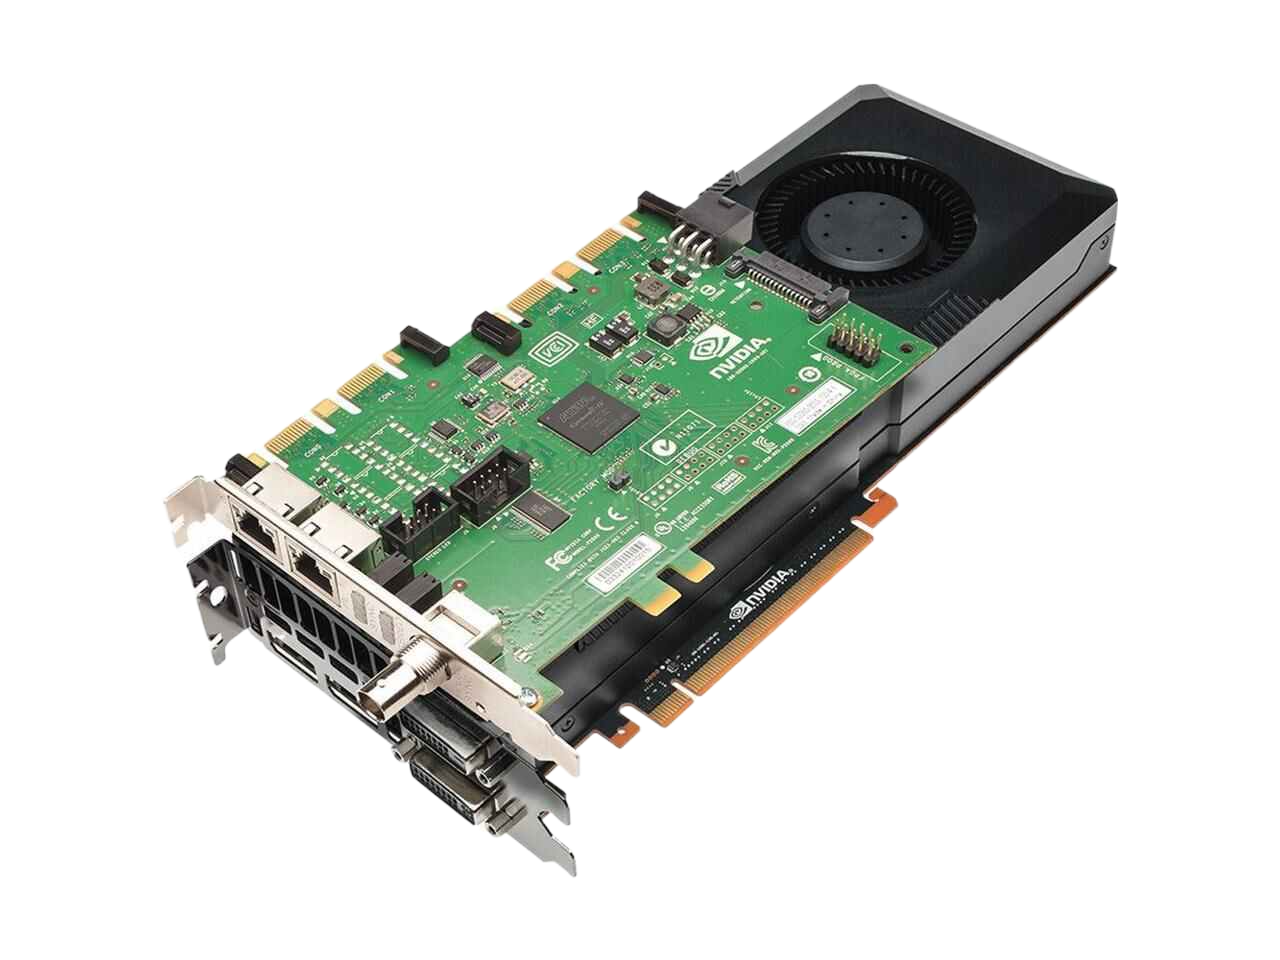 PNY NVIDIA Quadro K6000 12 GB GDDR5 with NVIDIA Quadro Sync Graphics Card VCQK6000-PB